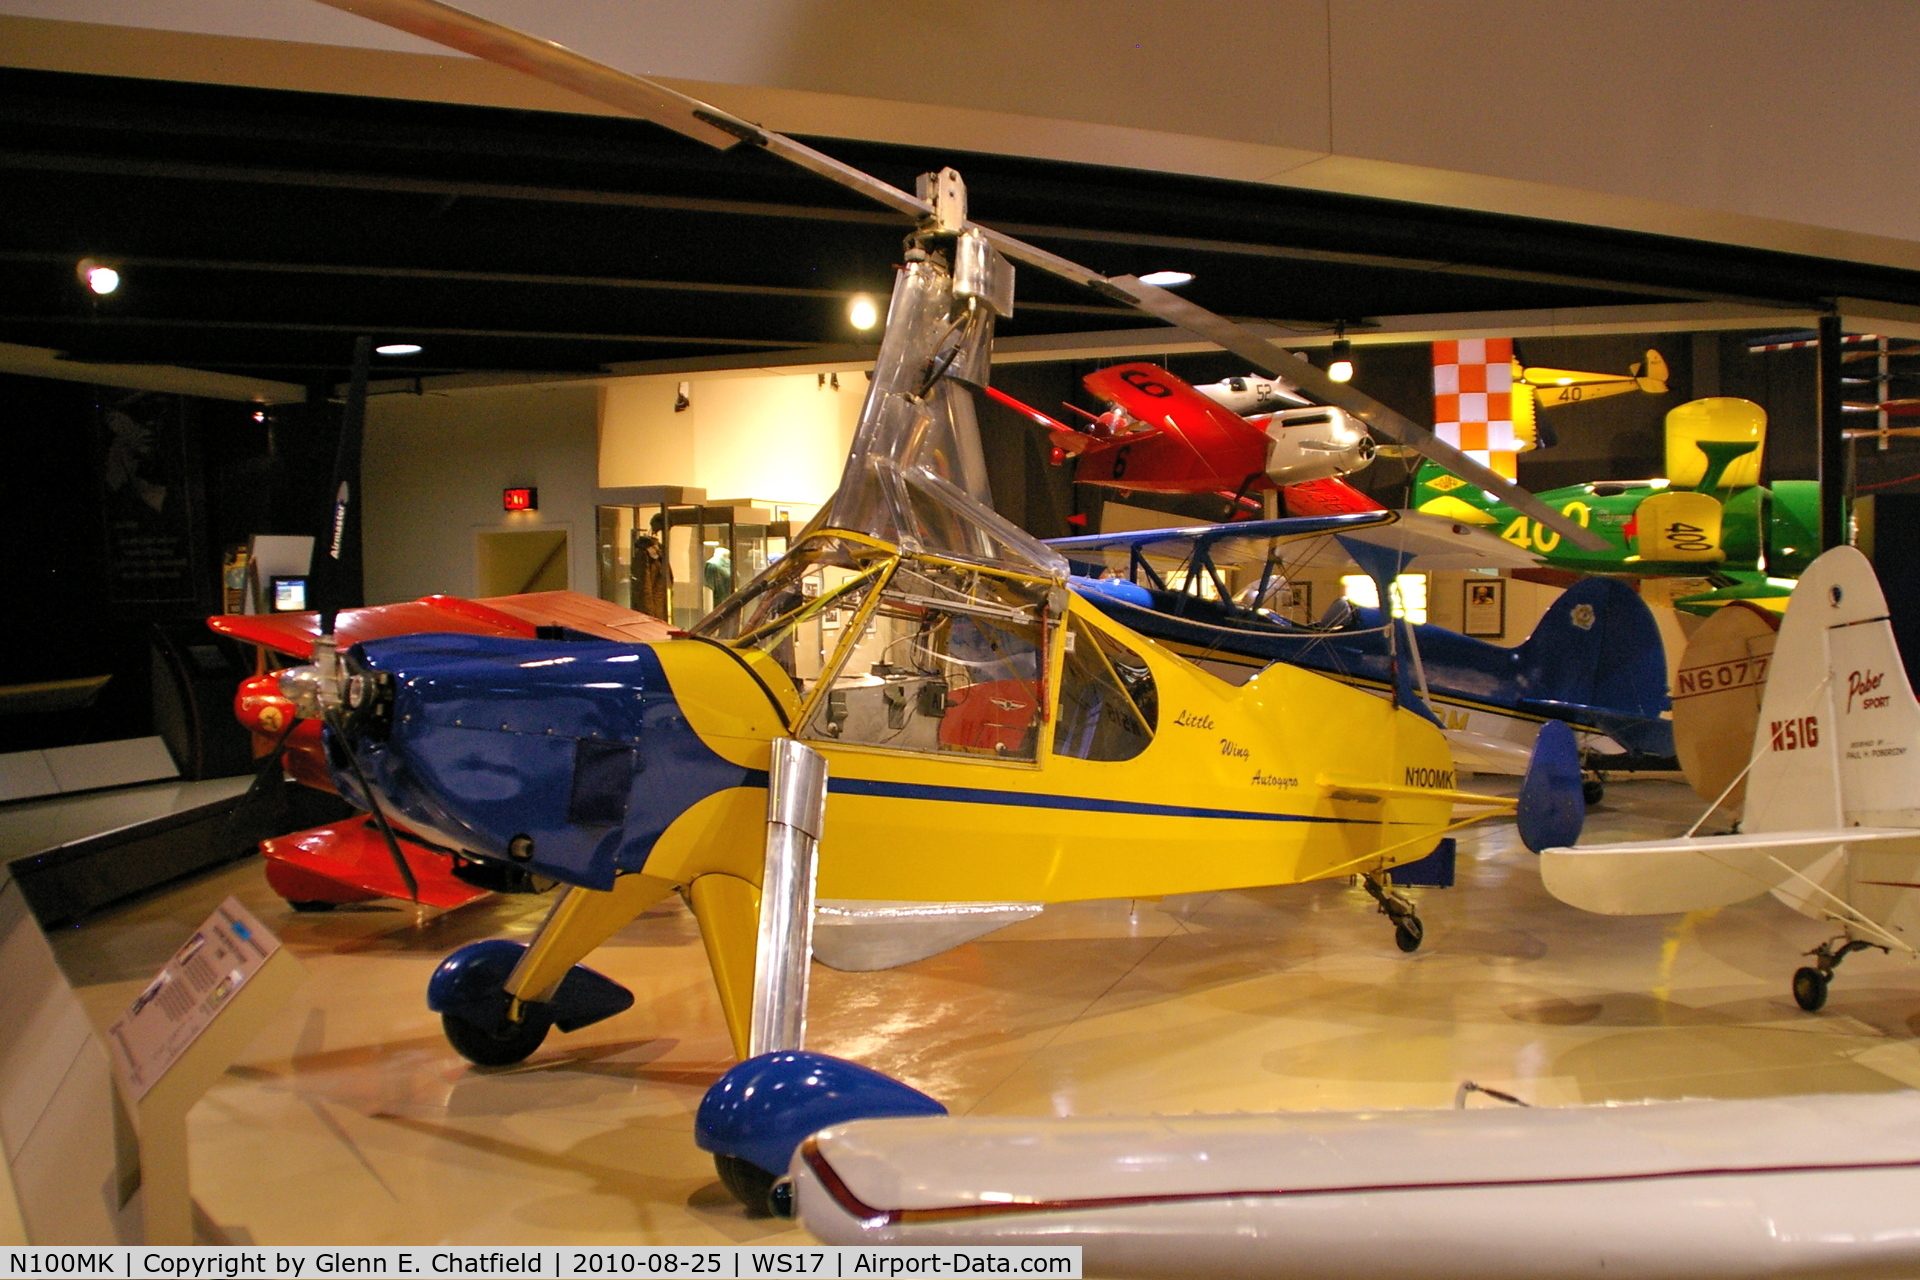 N100MK, 2000 Little Wing LW-5 C/N 1, EAA Biplane at the EAA Museum